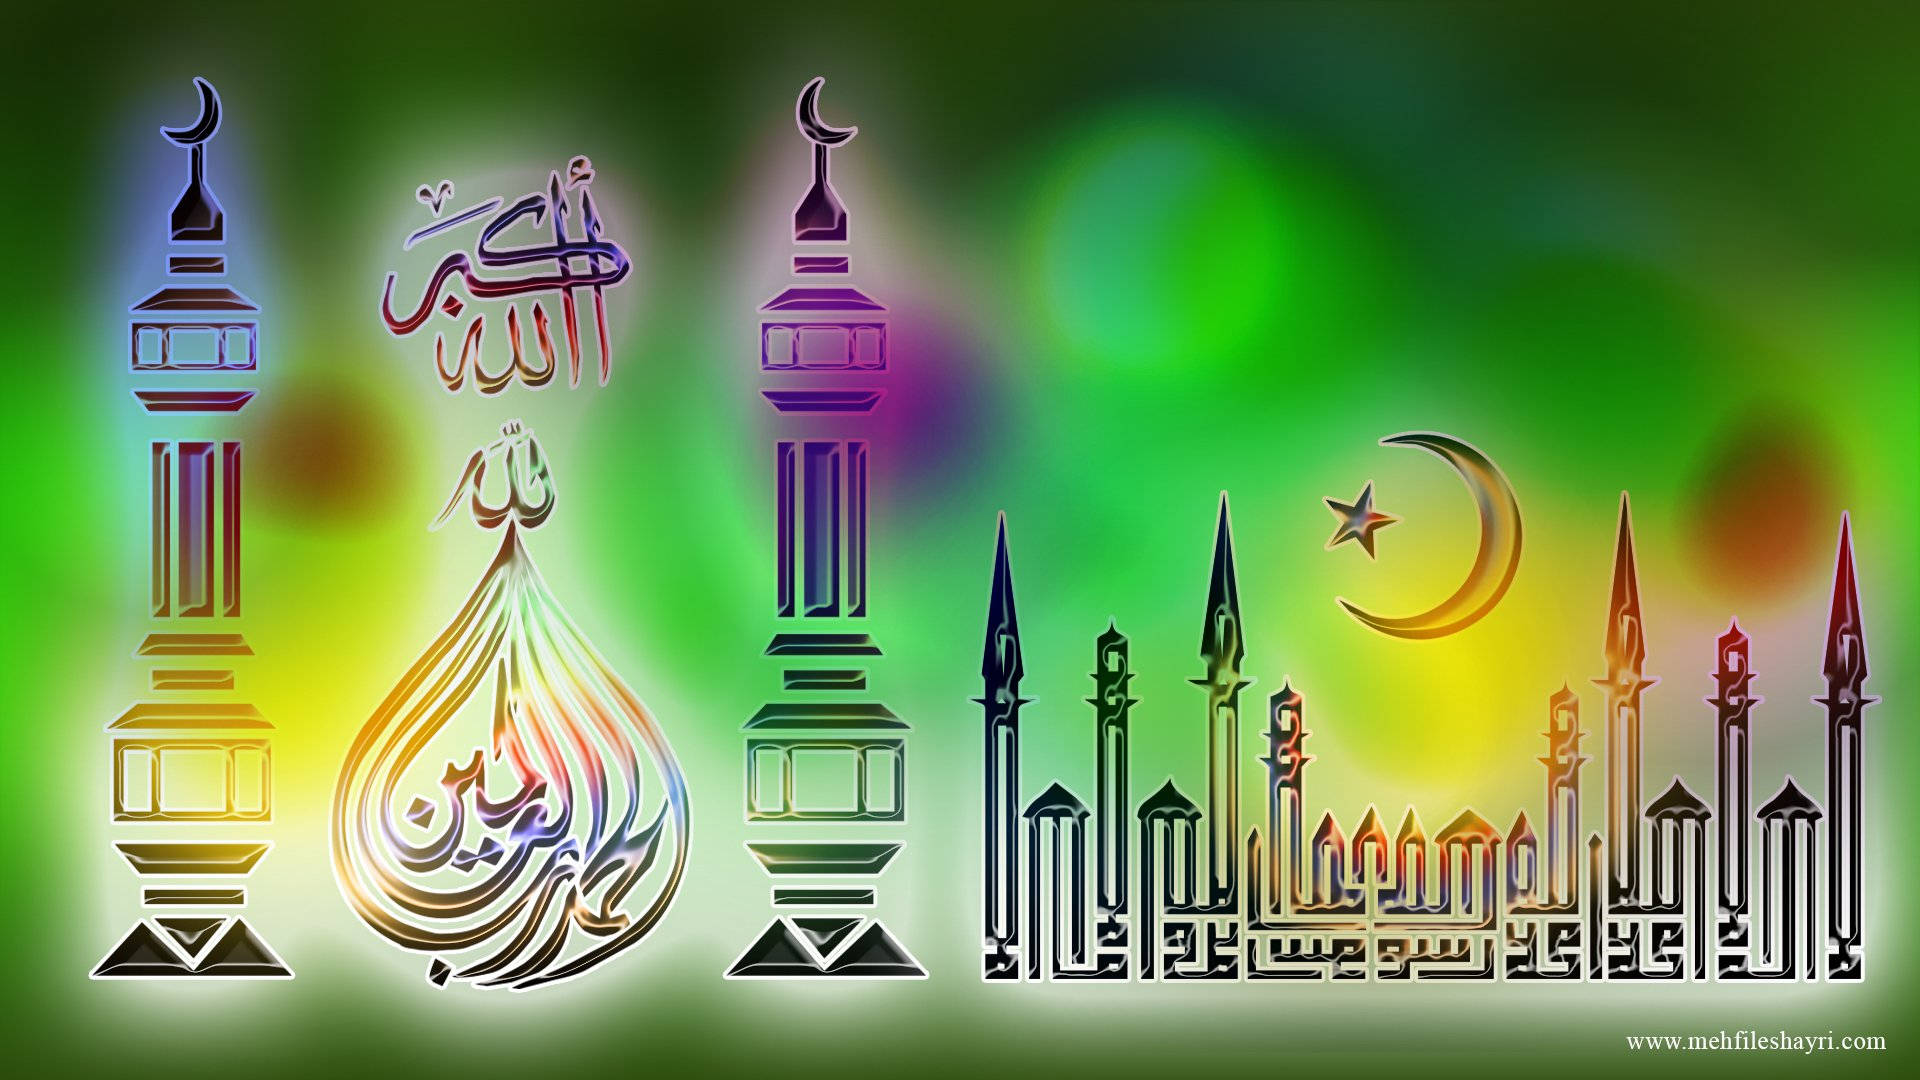 Hd Digital Islamic Art Wallpaper